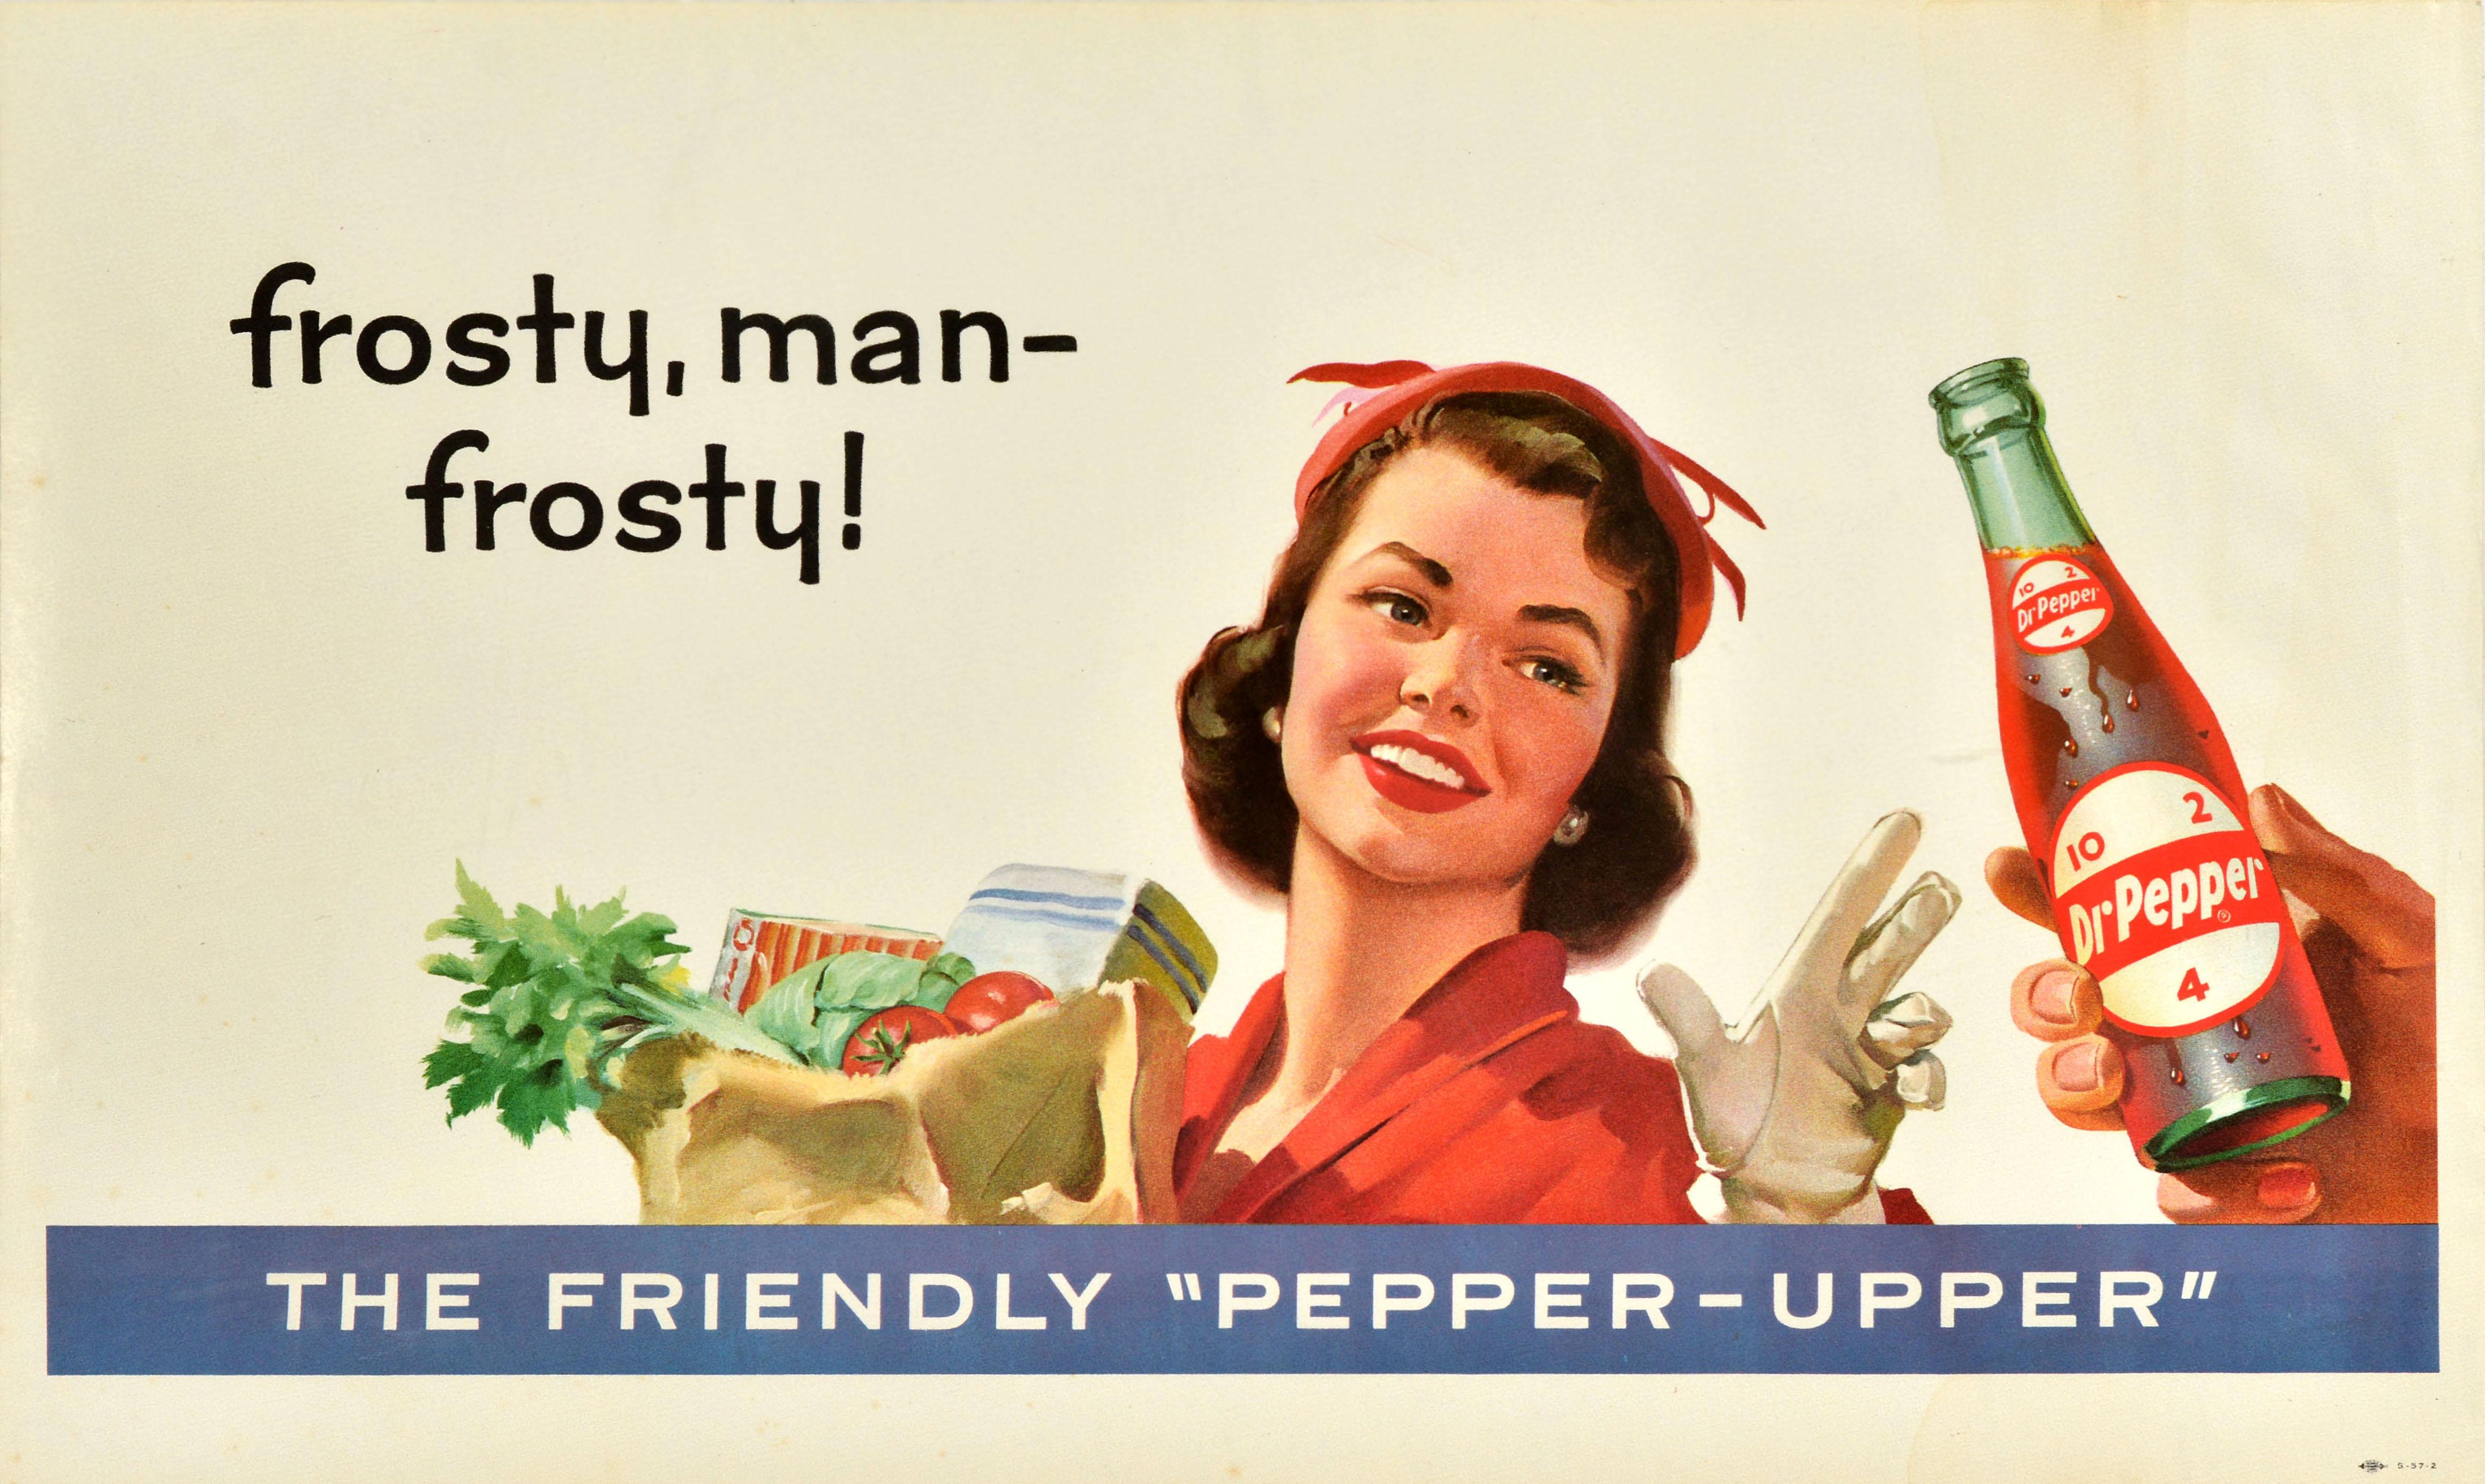 Unknown Print - Original Vintage Soft Drink Advertising Poster Dr Pepper Frosty Man Soda Pop